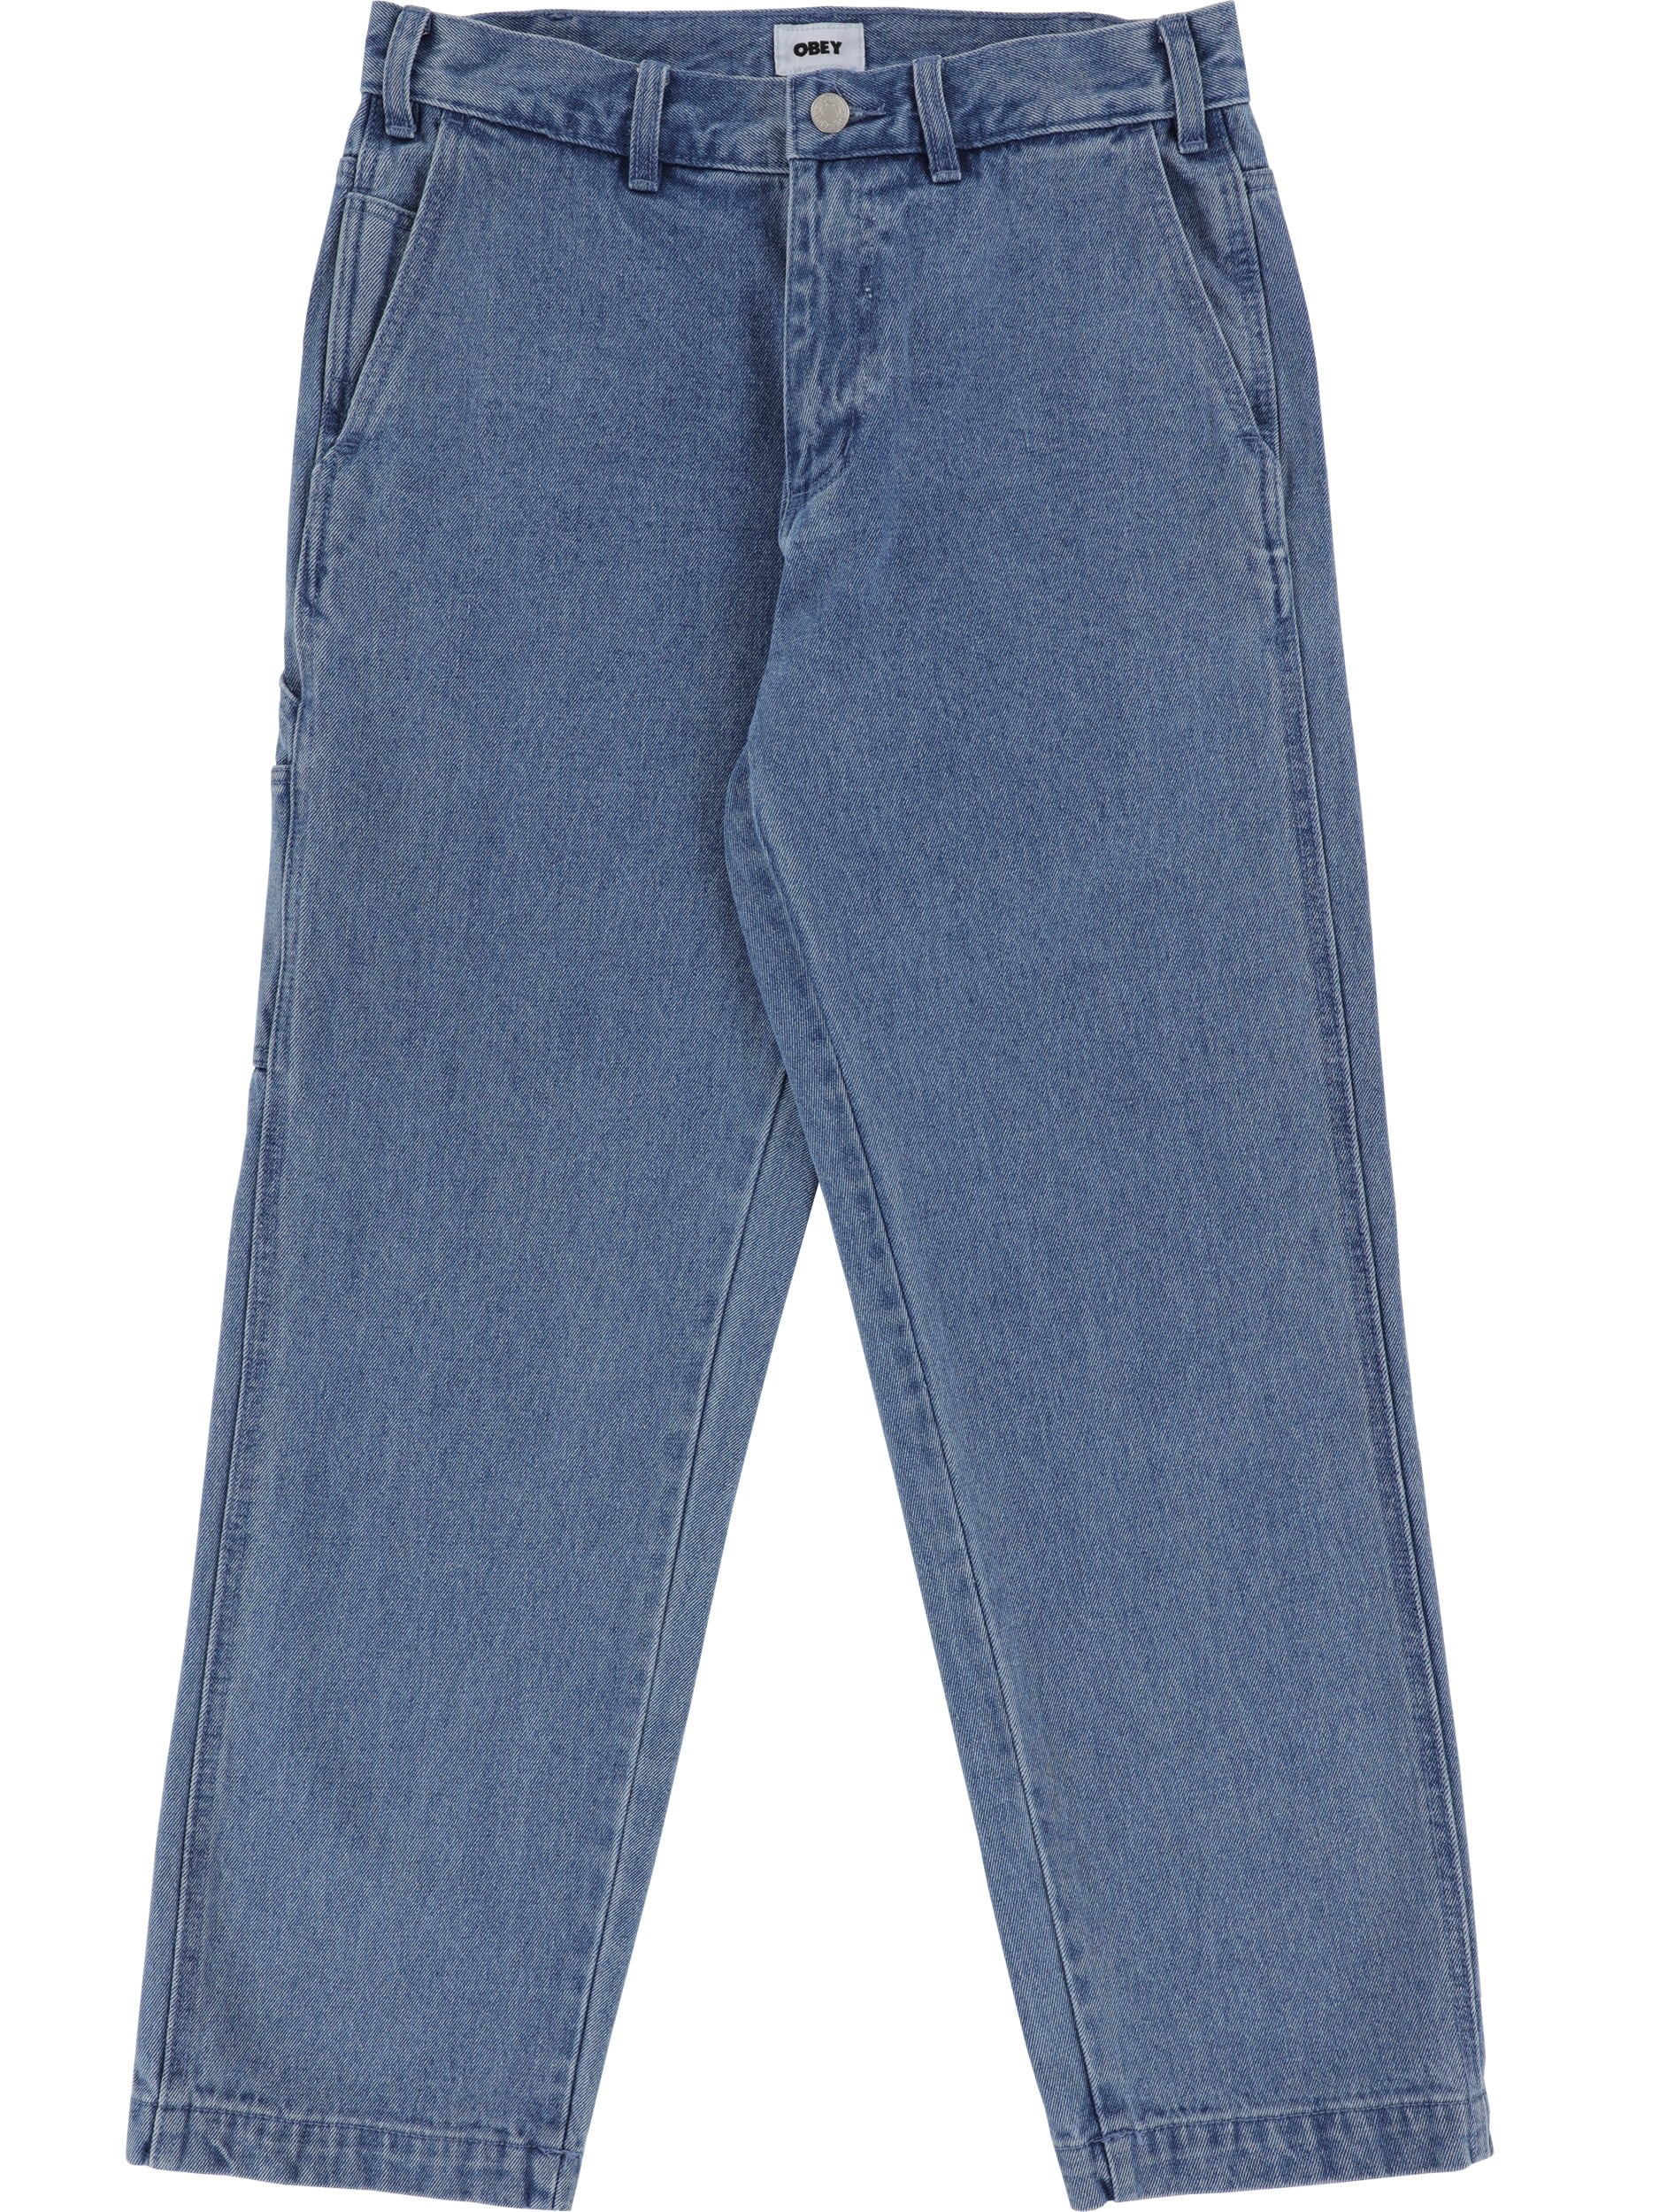 Obey Hardwork Carpenter Denim Jeans - stonewash indigo | Tactics